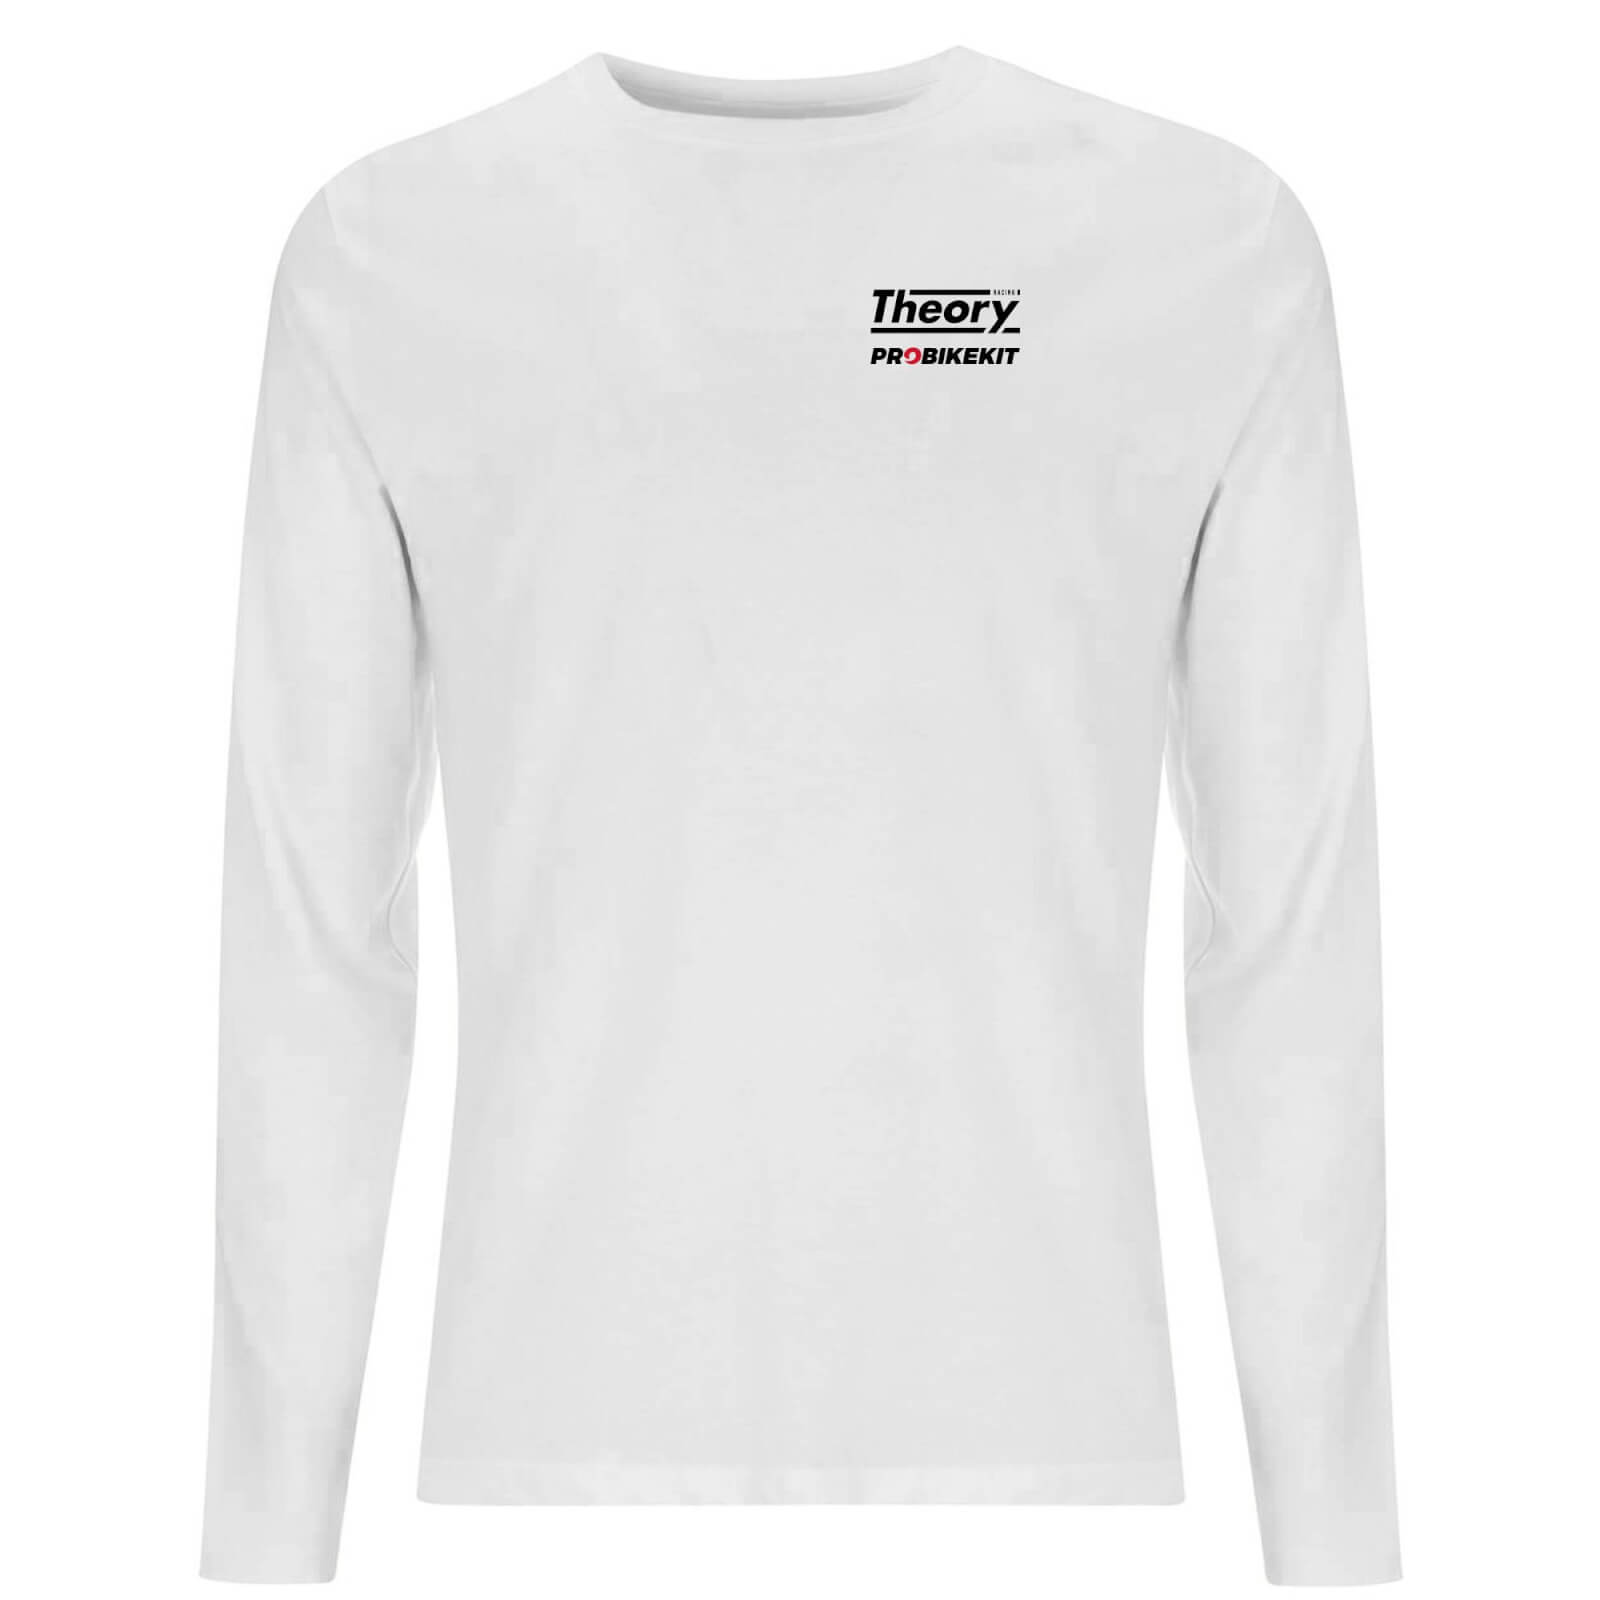 PBK Theory Logo Pocket Print Men's Long Sleeve T-Shirt - White - S - White